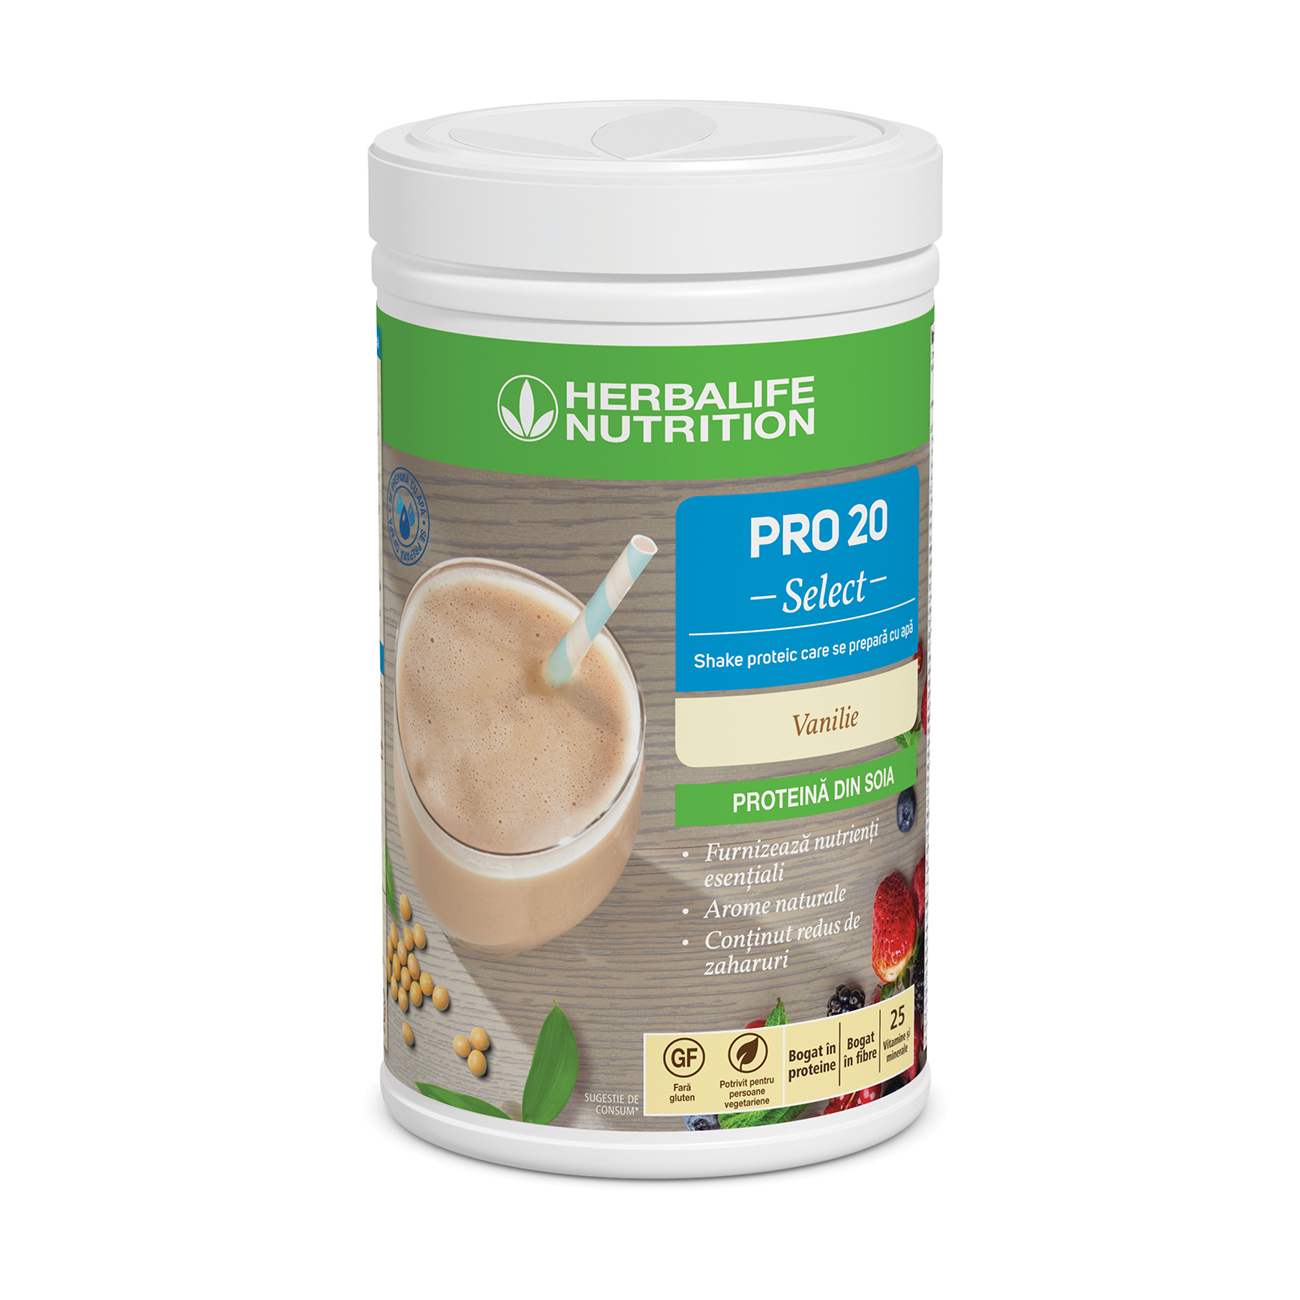 PRO 20 Select Shake proteic Vanilie product shot